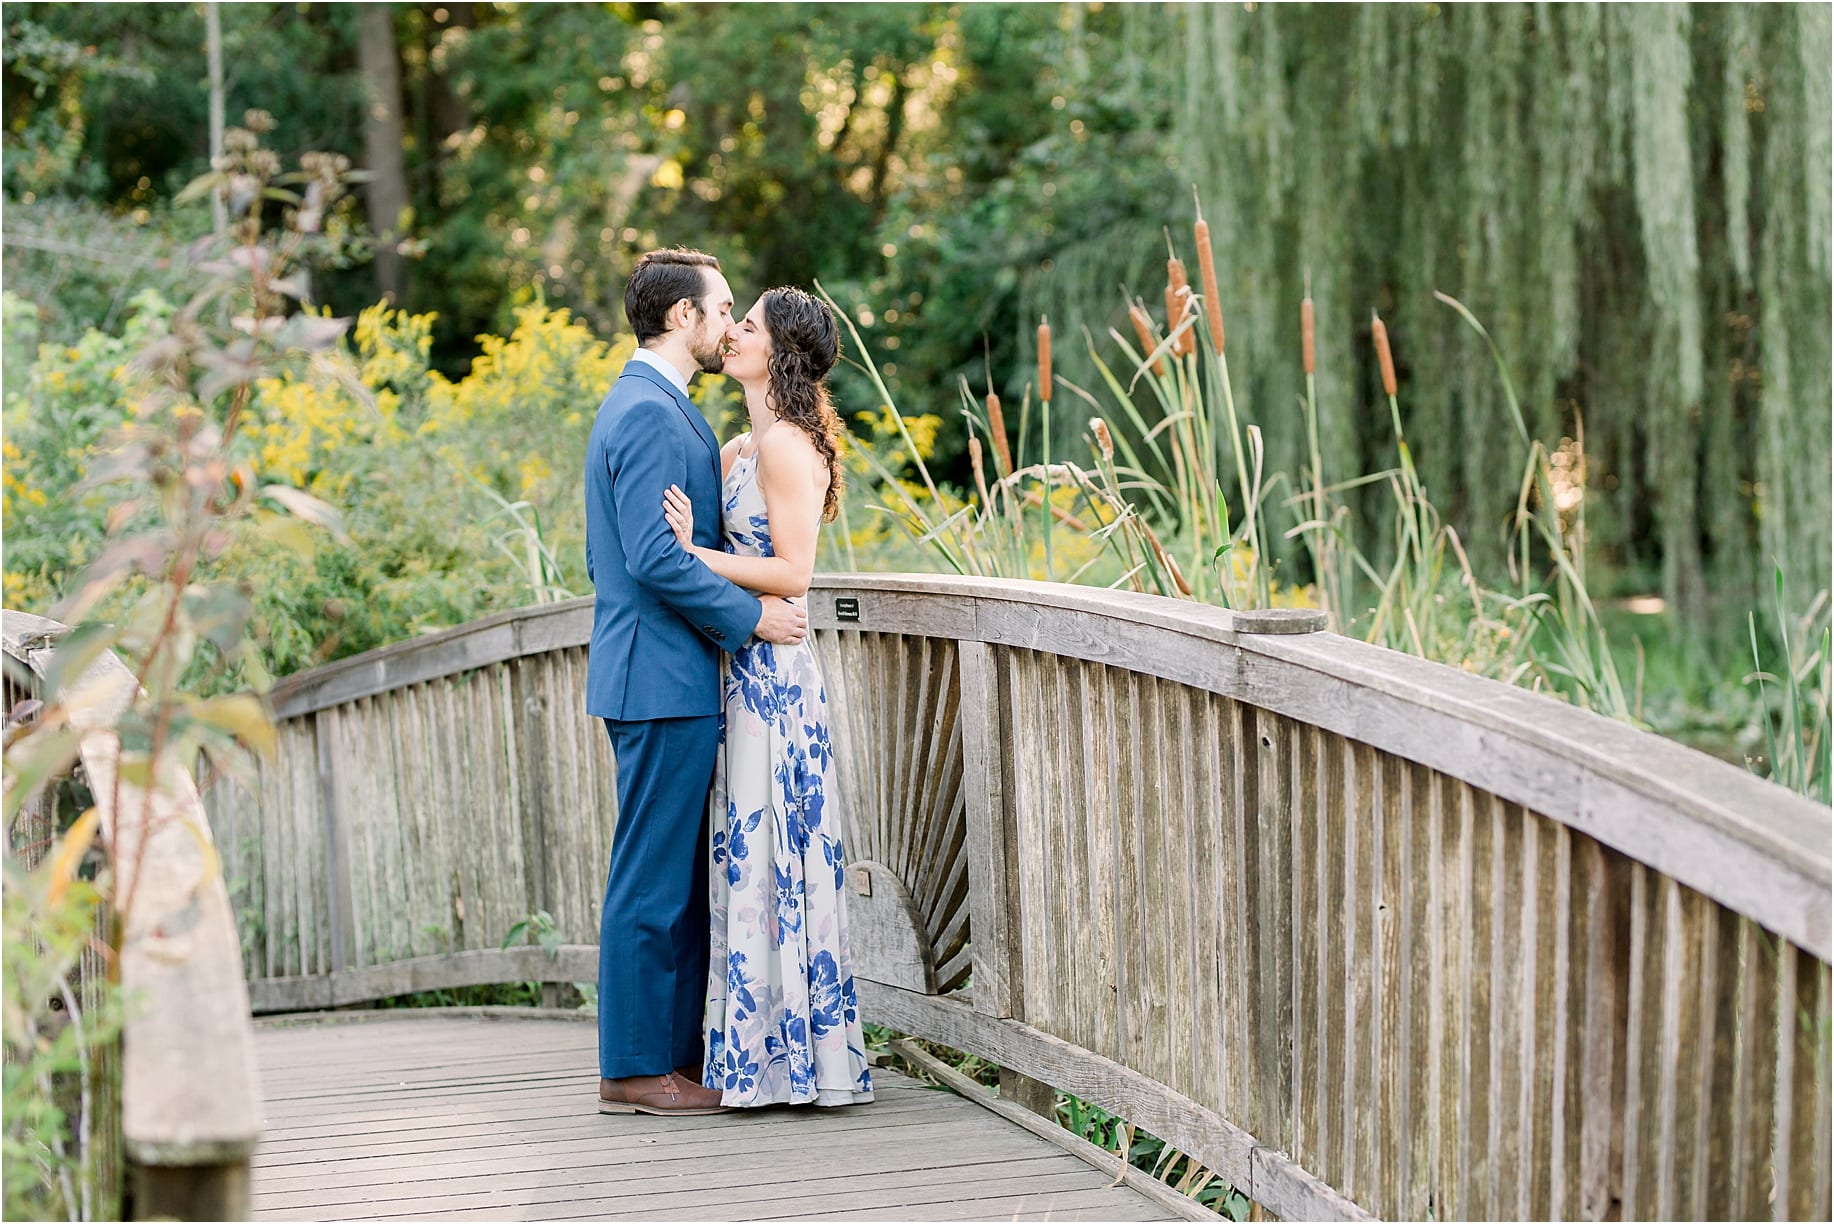 Meadowlark Botanical Gardens Engagements DC wedding photographer erika mills_0004.jpg